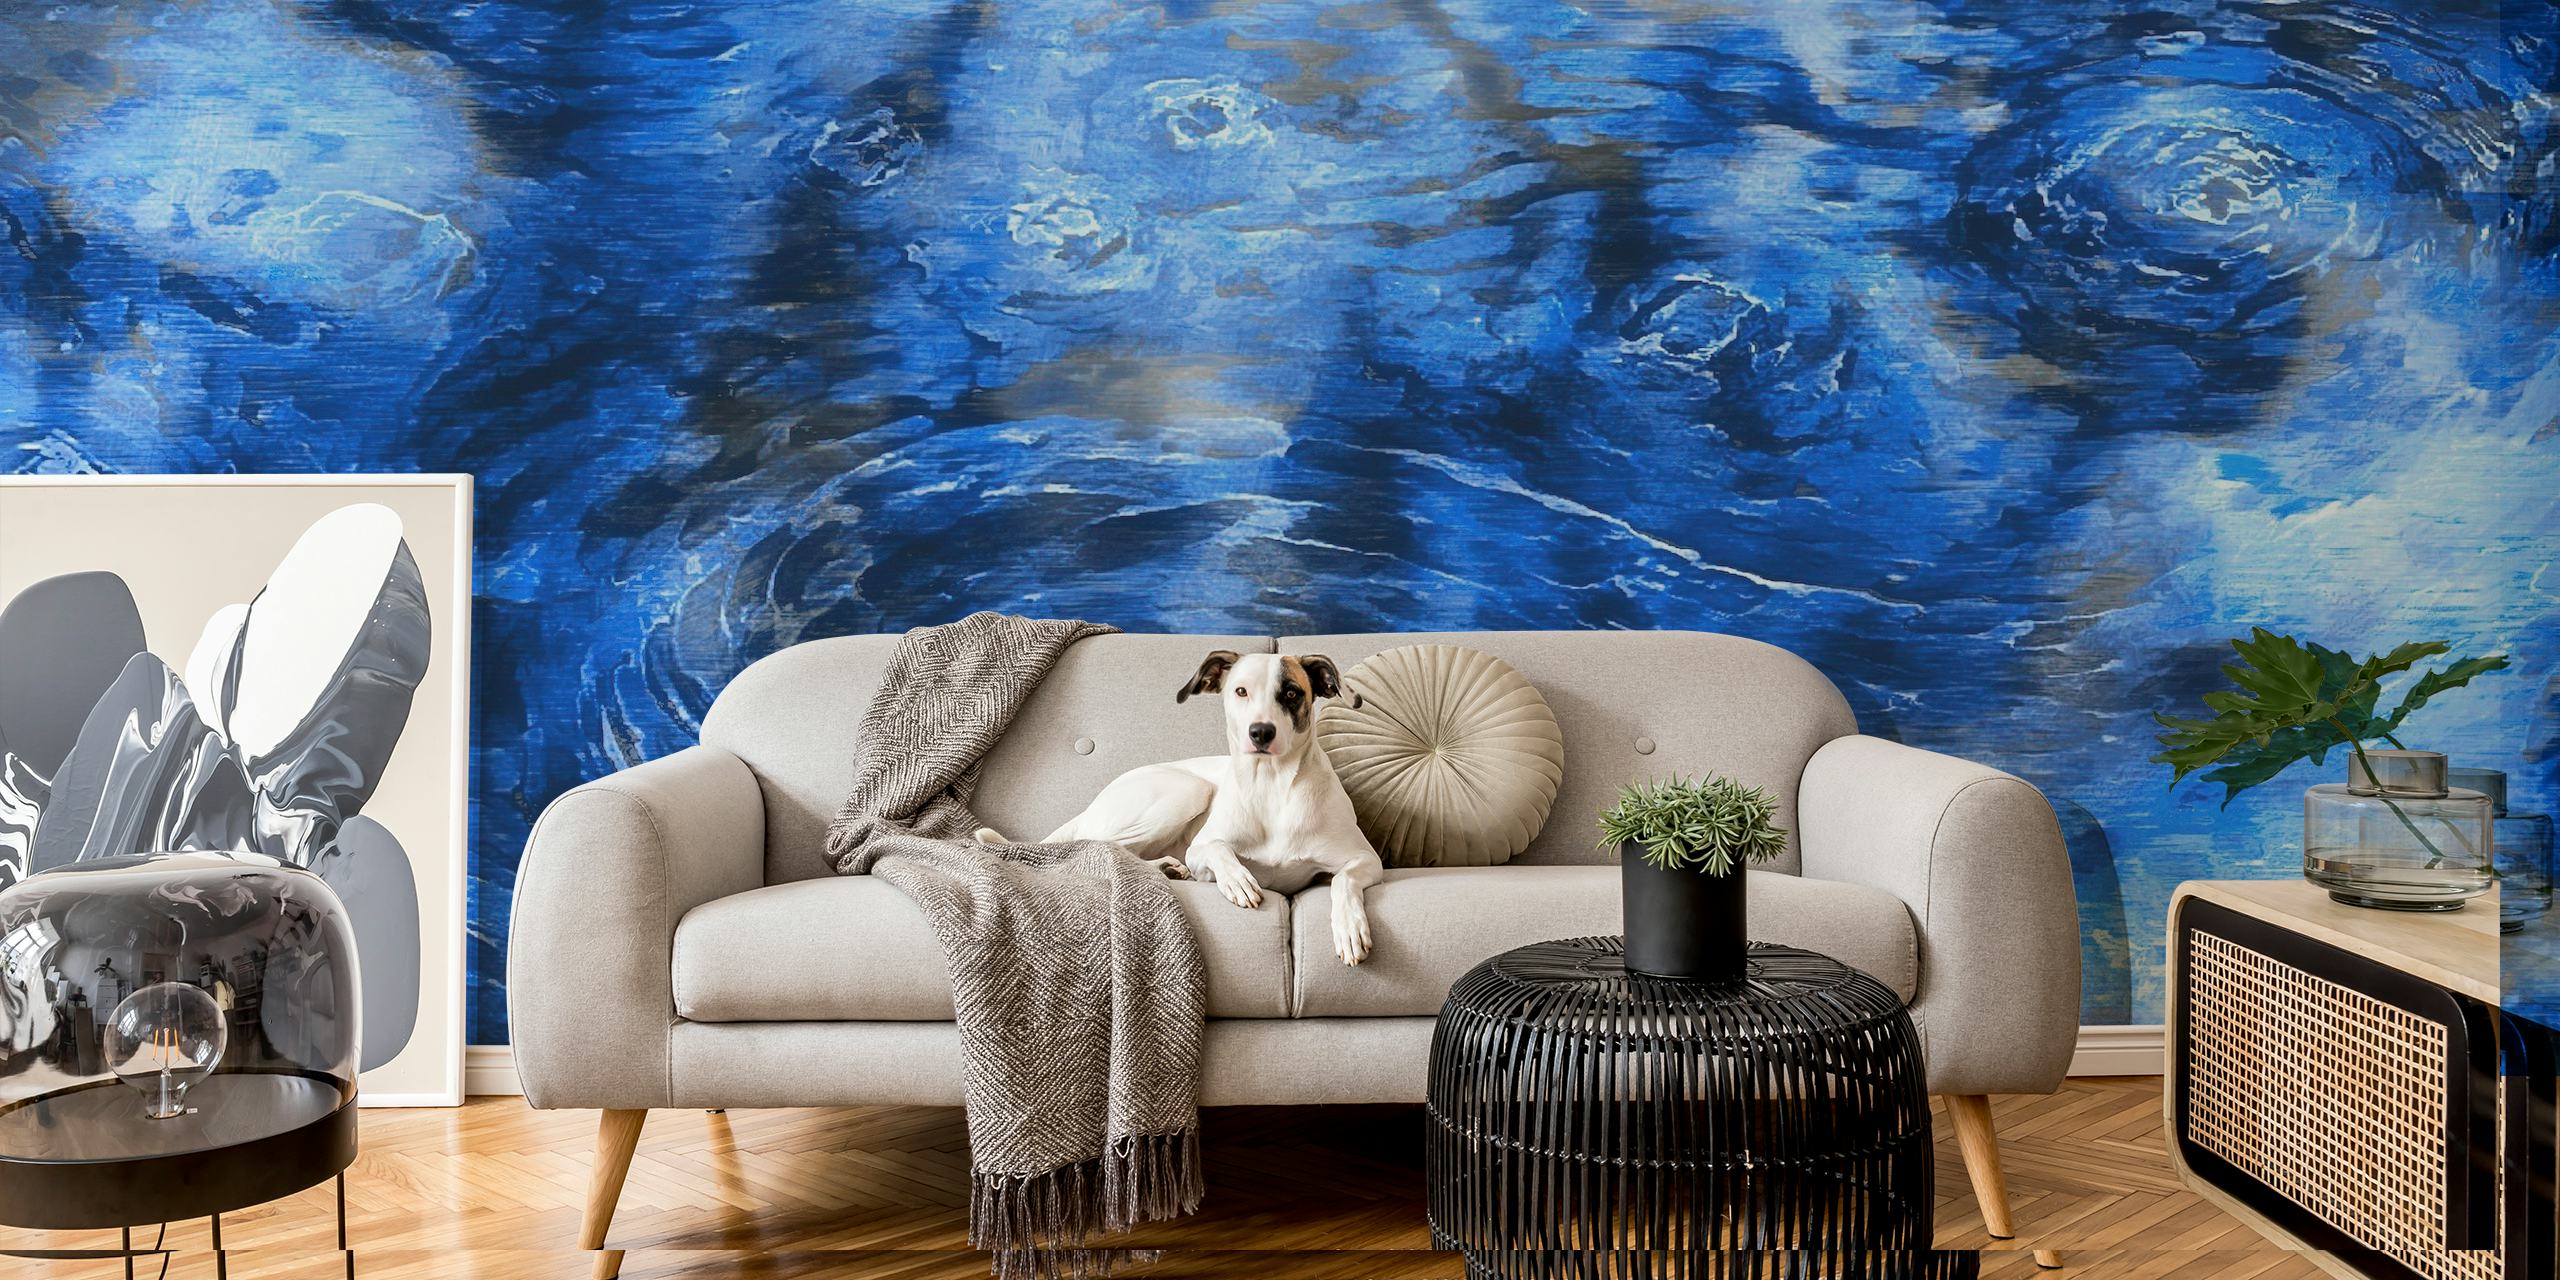 Fototapeta Van Gogh Clouds v impresionistickém stylu s vířícími modrobílými vzory